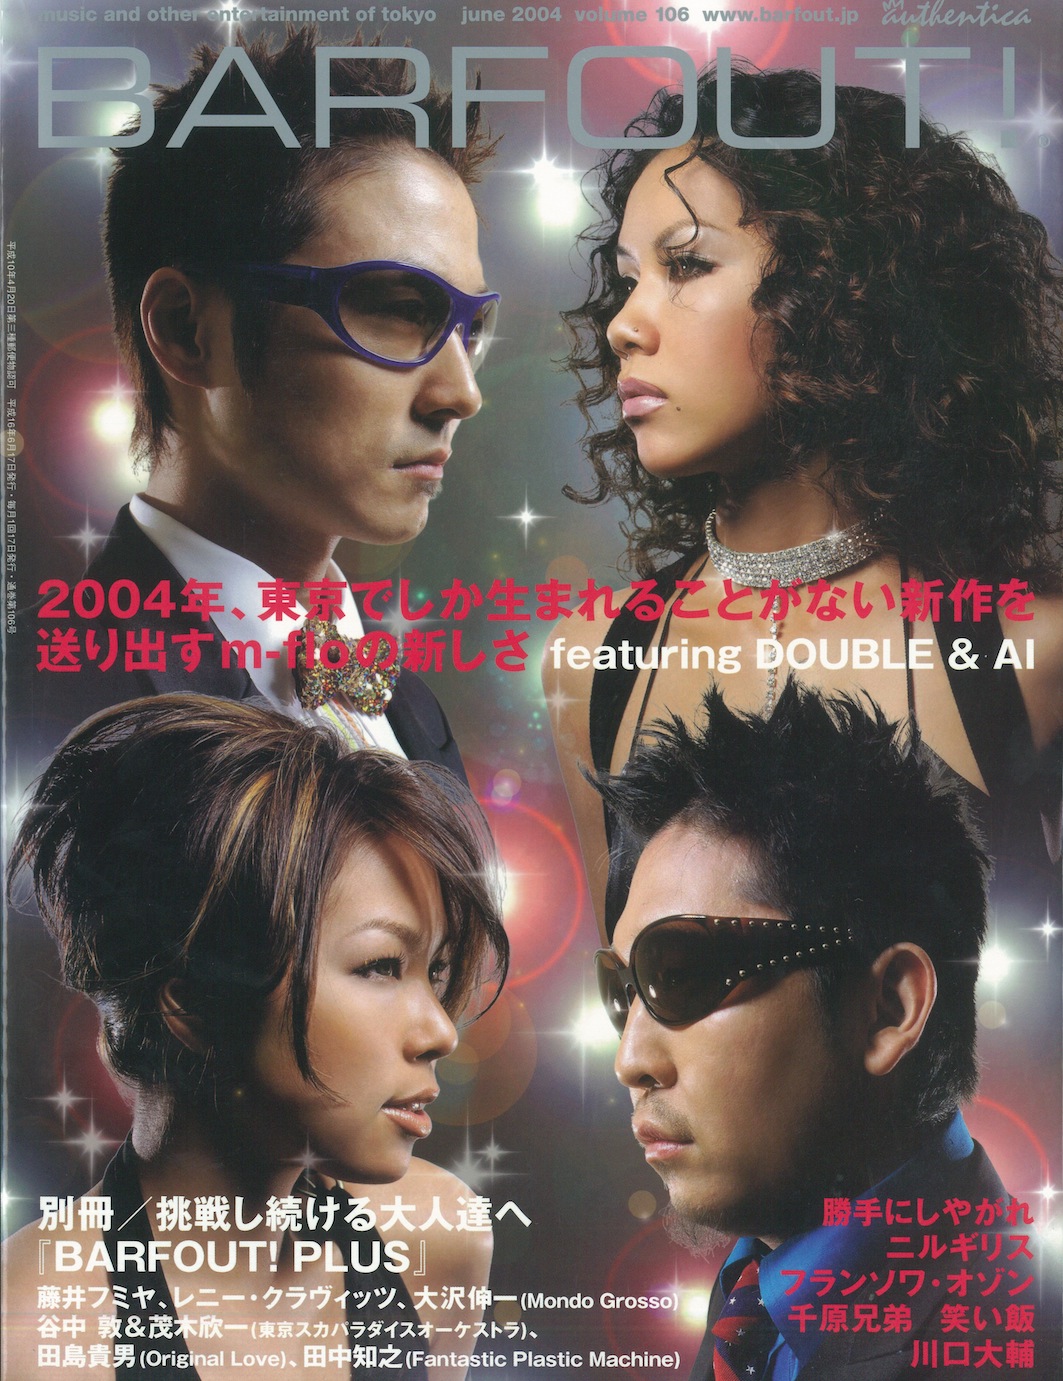 JUNE 2004 VOLUME 106